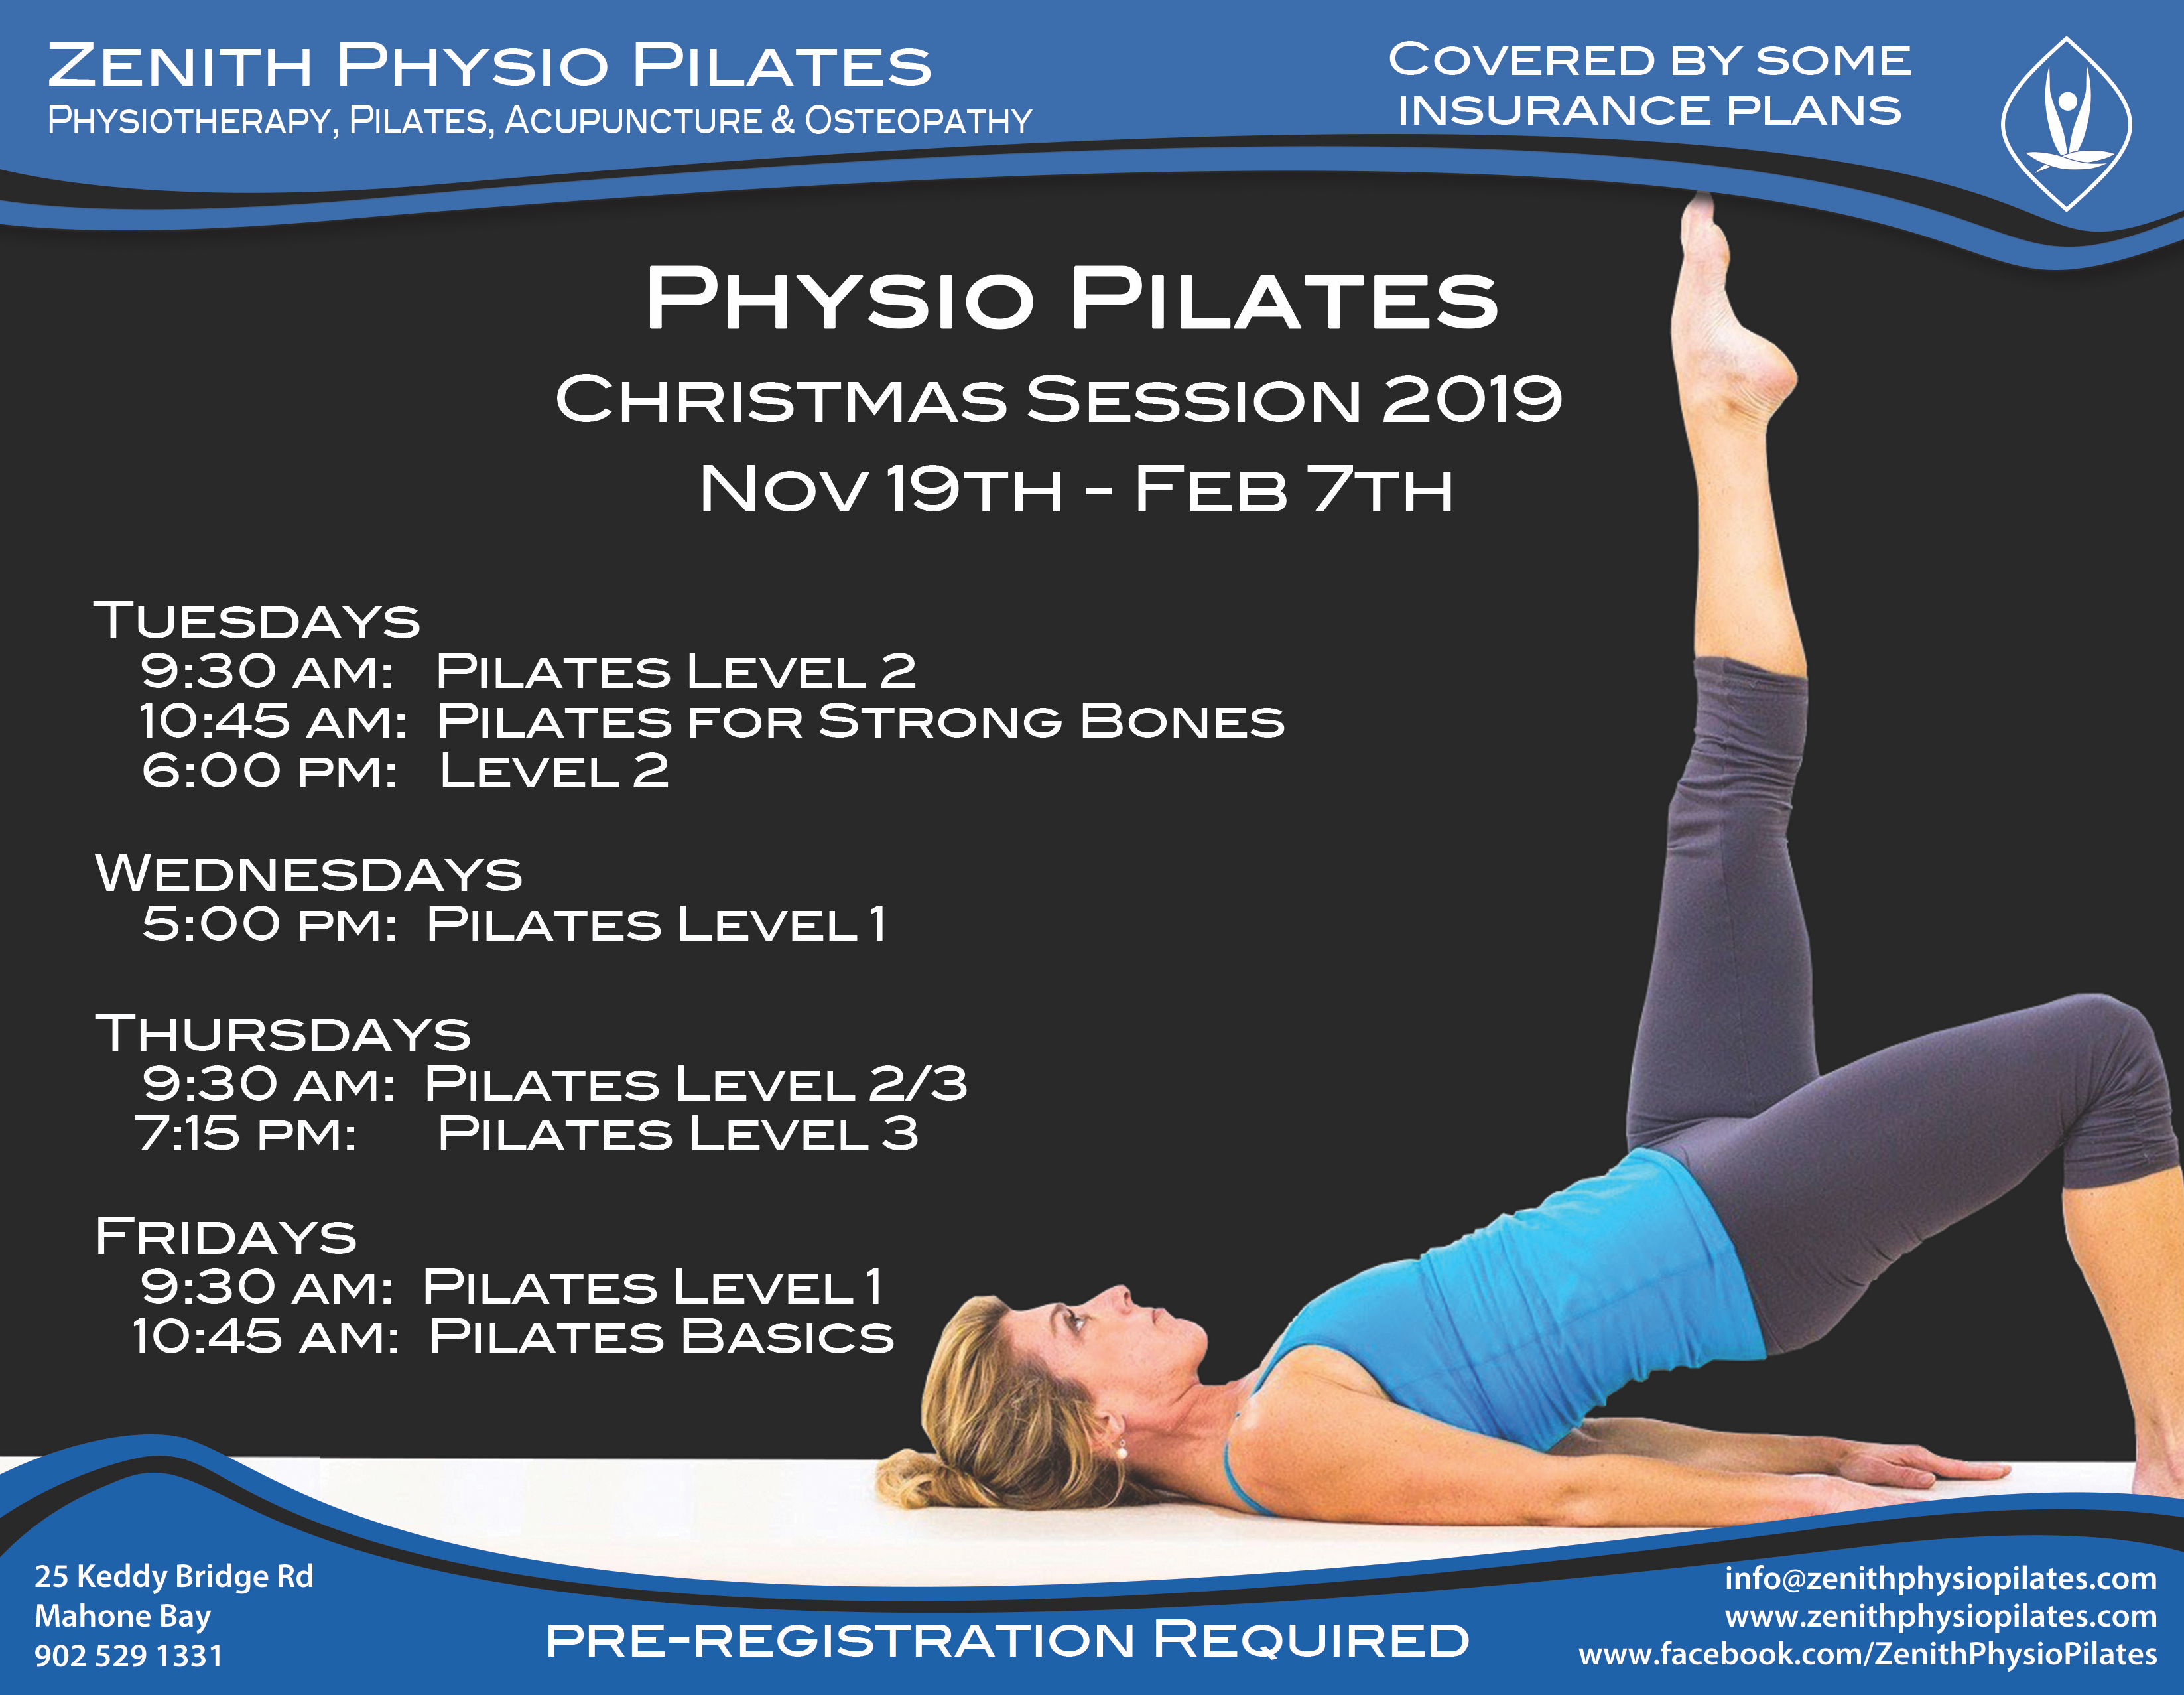 New Christmas 2019 Physio Pilates Session Starts Nov 19th - Zenith